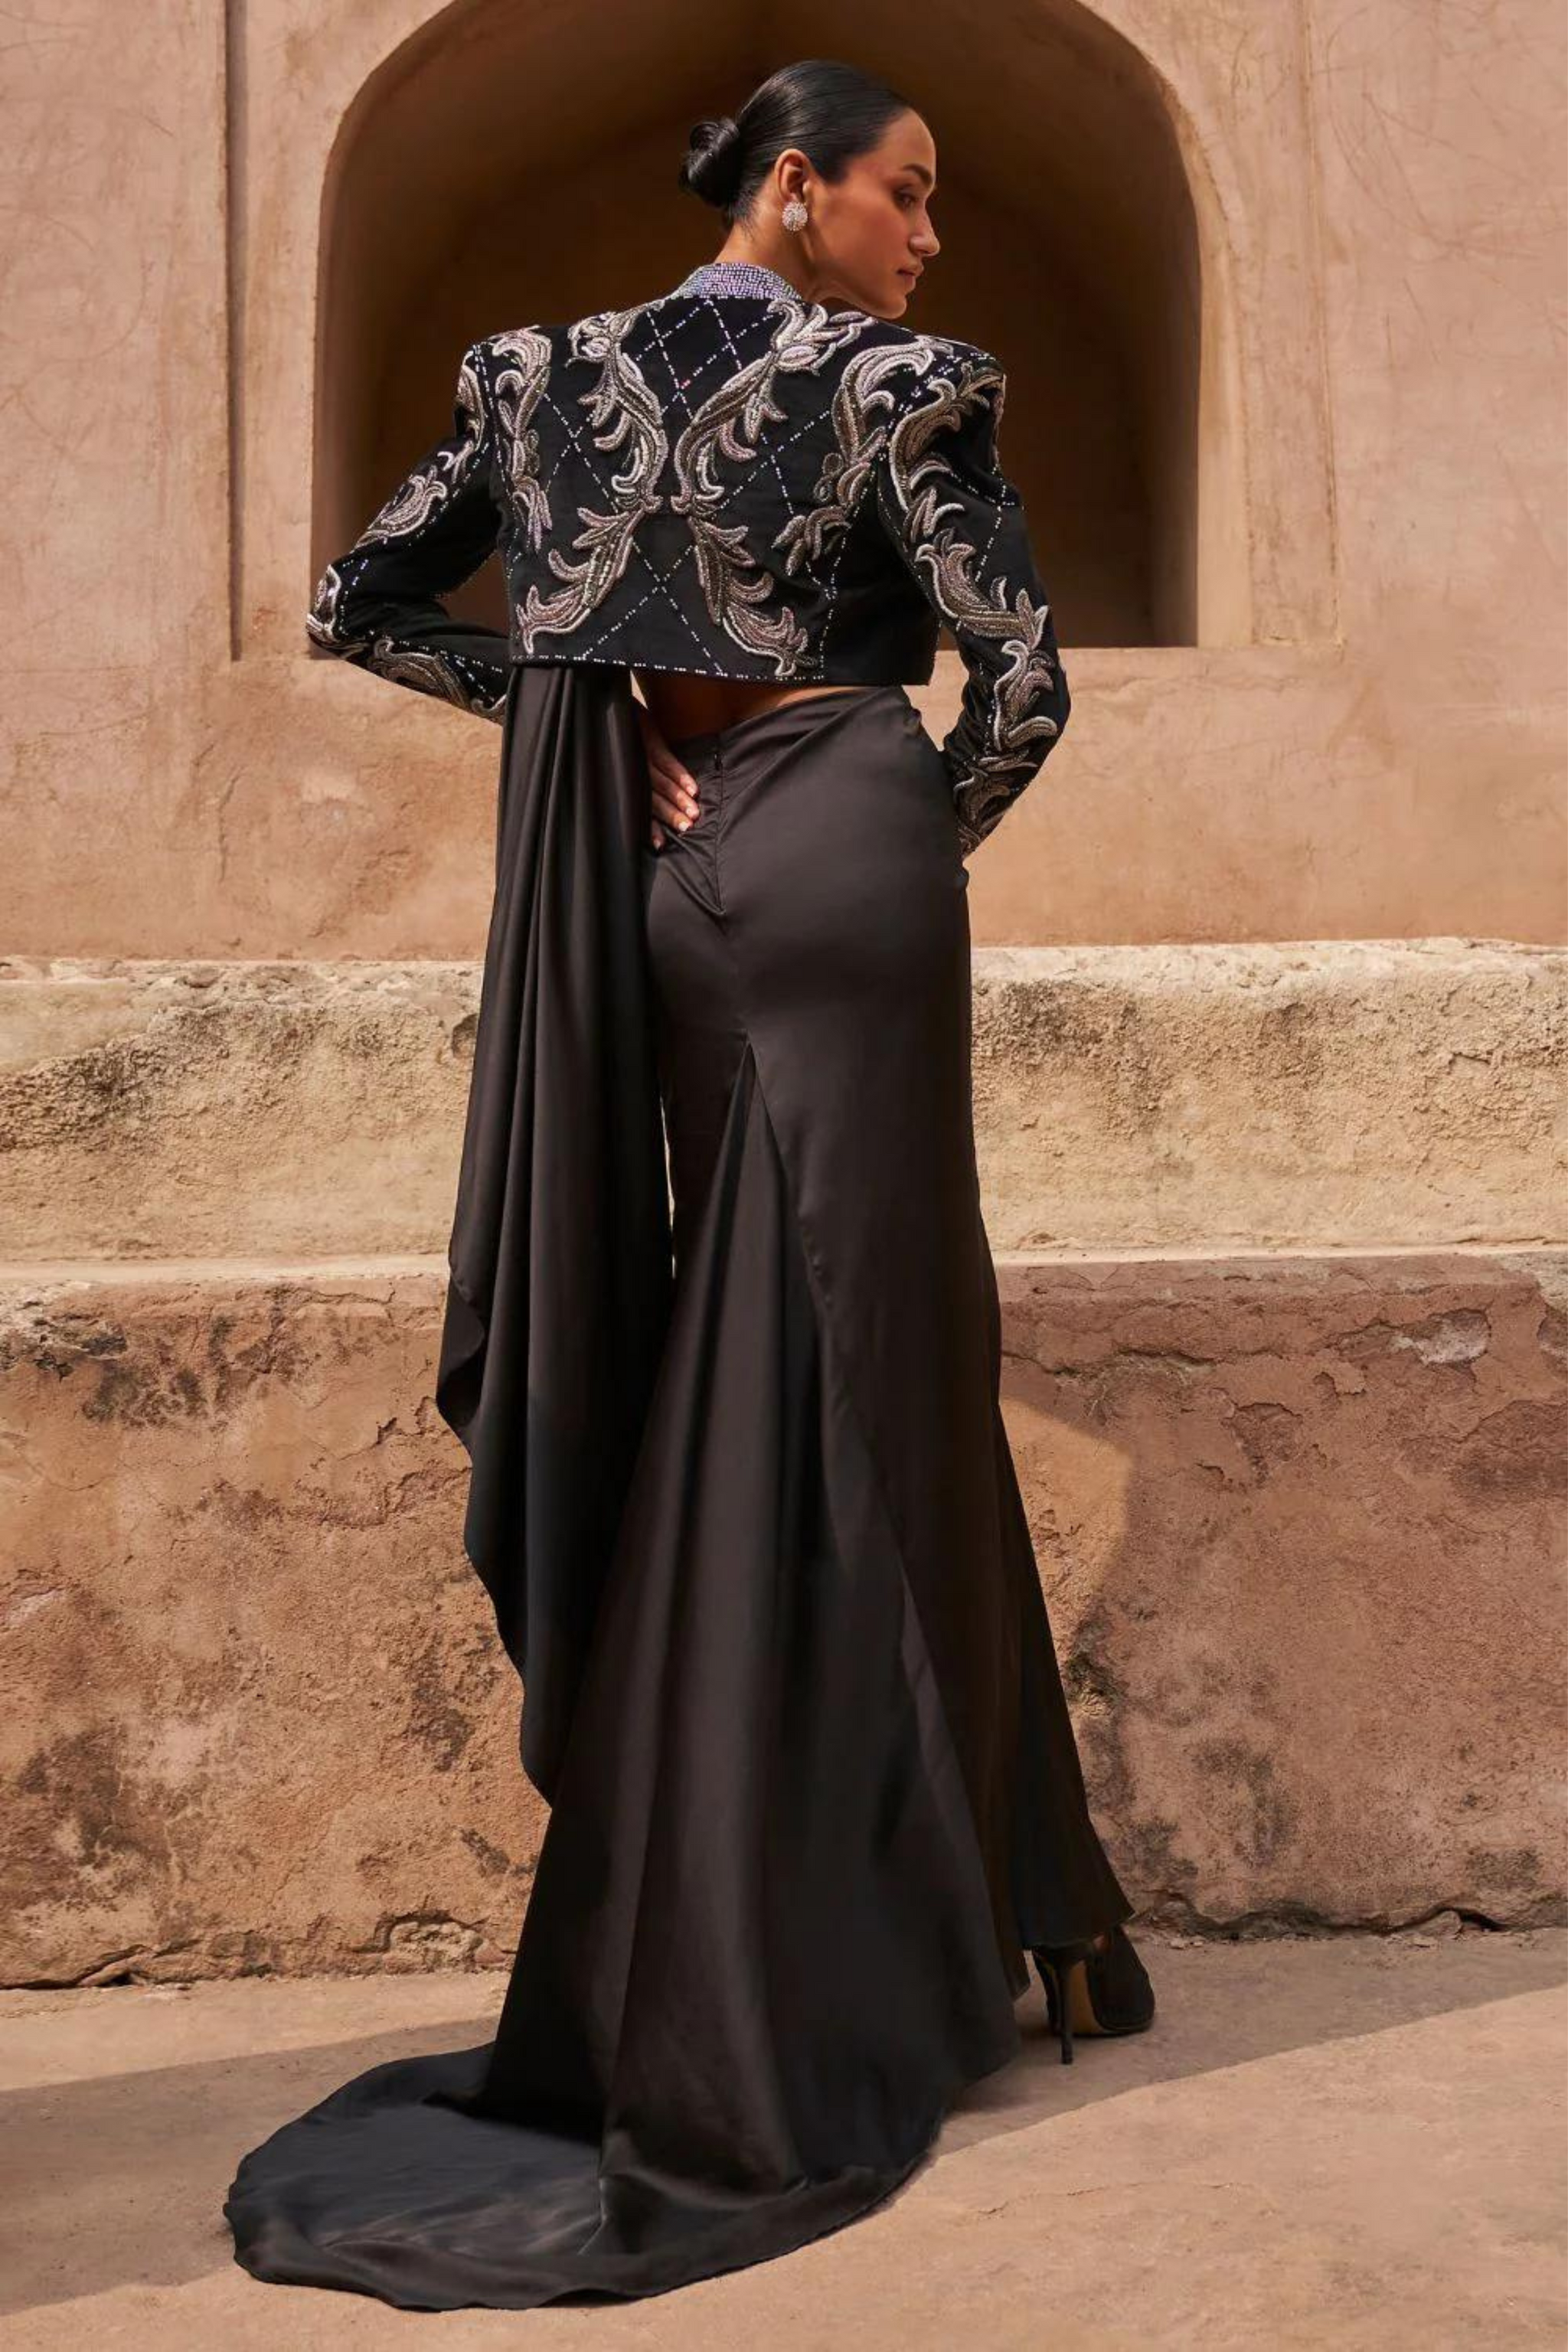 Beige Silk Draped Blazer With Crop Top and Skirt